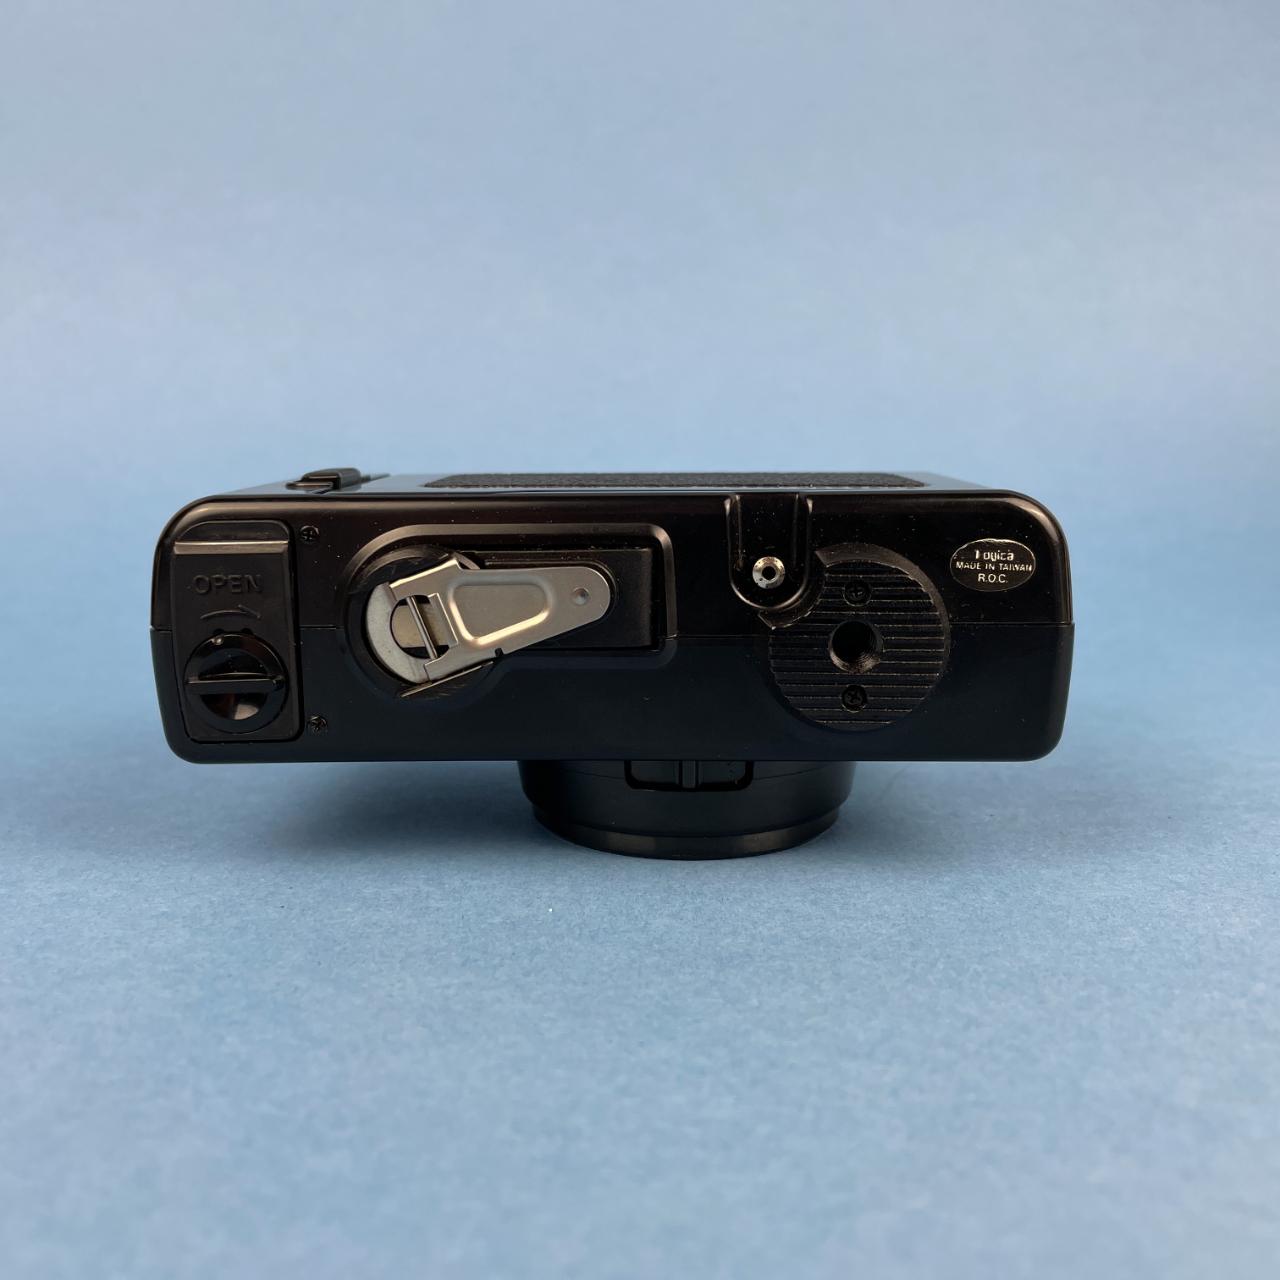 Konica Black Cameras-and-accessories (3)